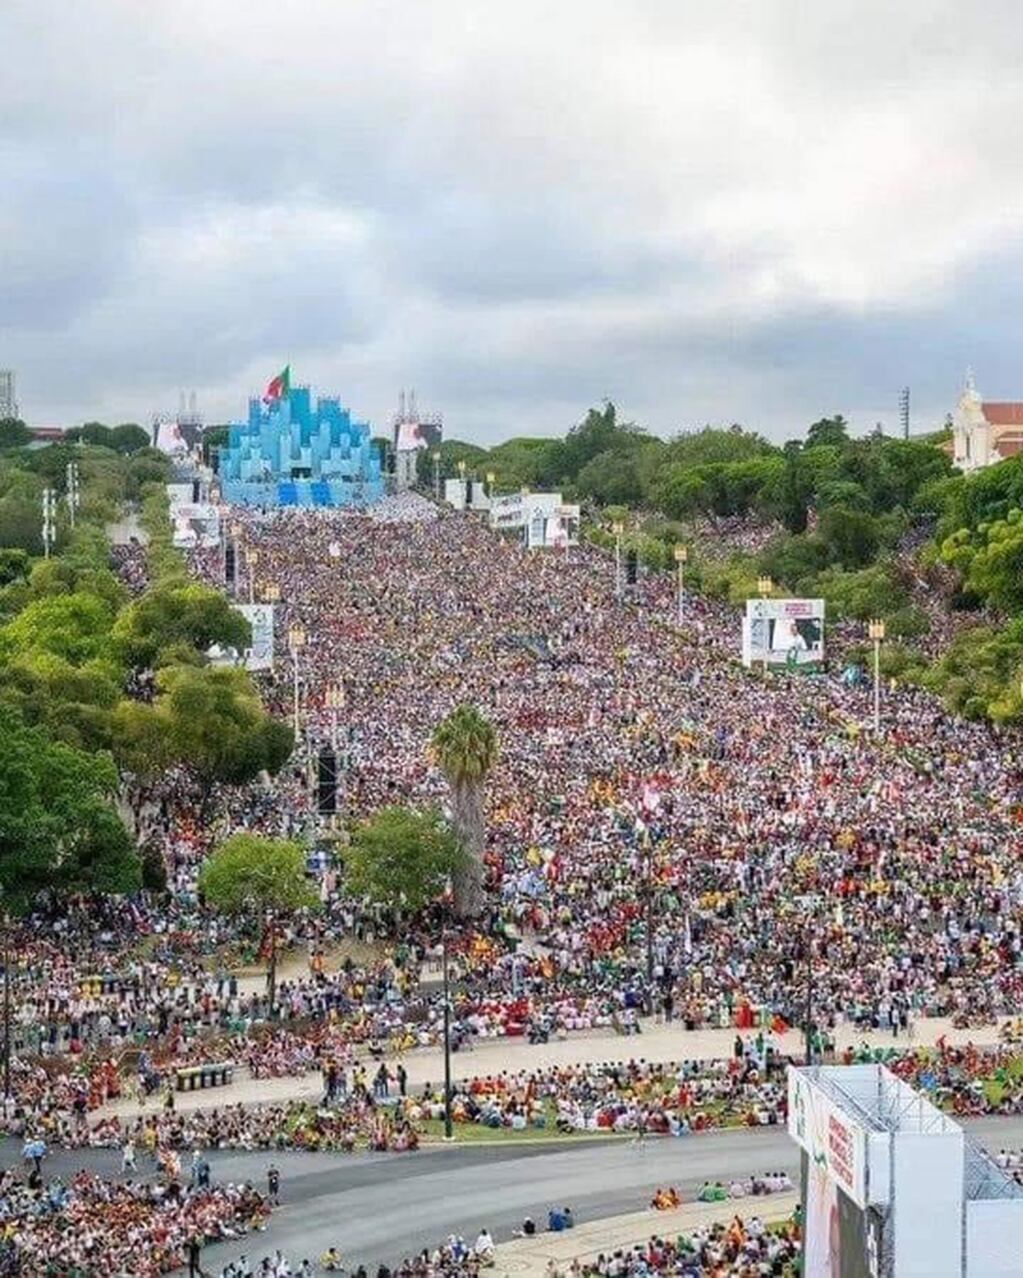 La gran multitud de fieles en el santuario de Fátima. Foto: Twitter / @qriswell